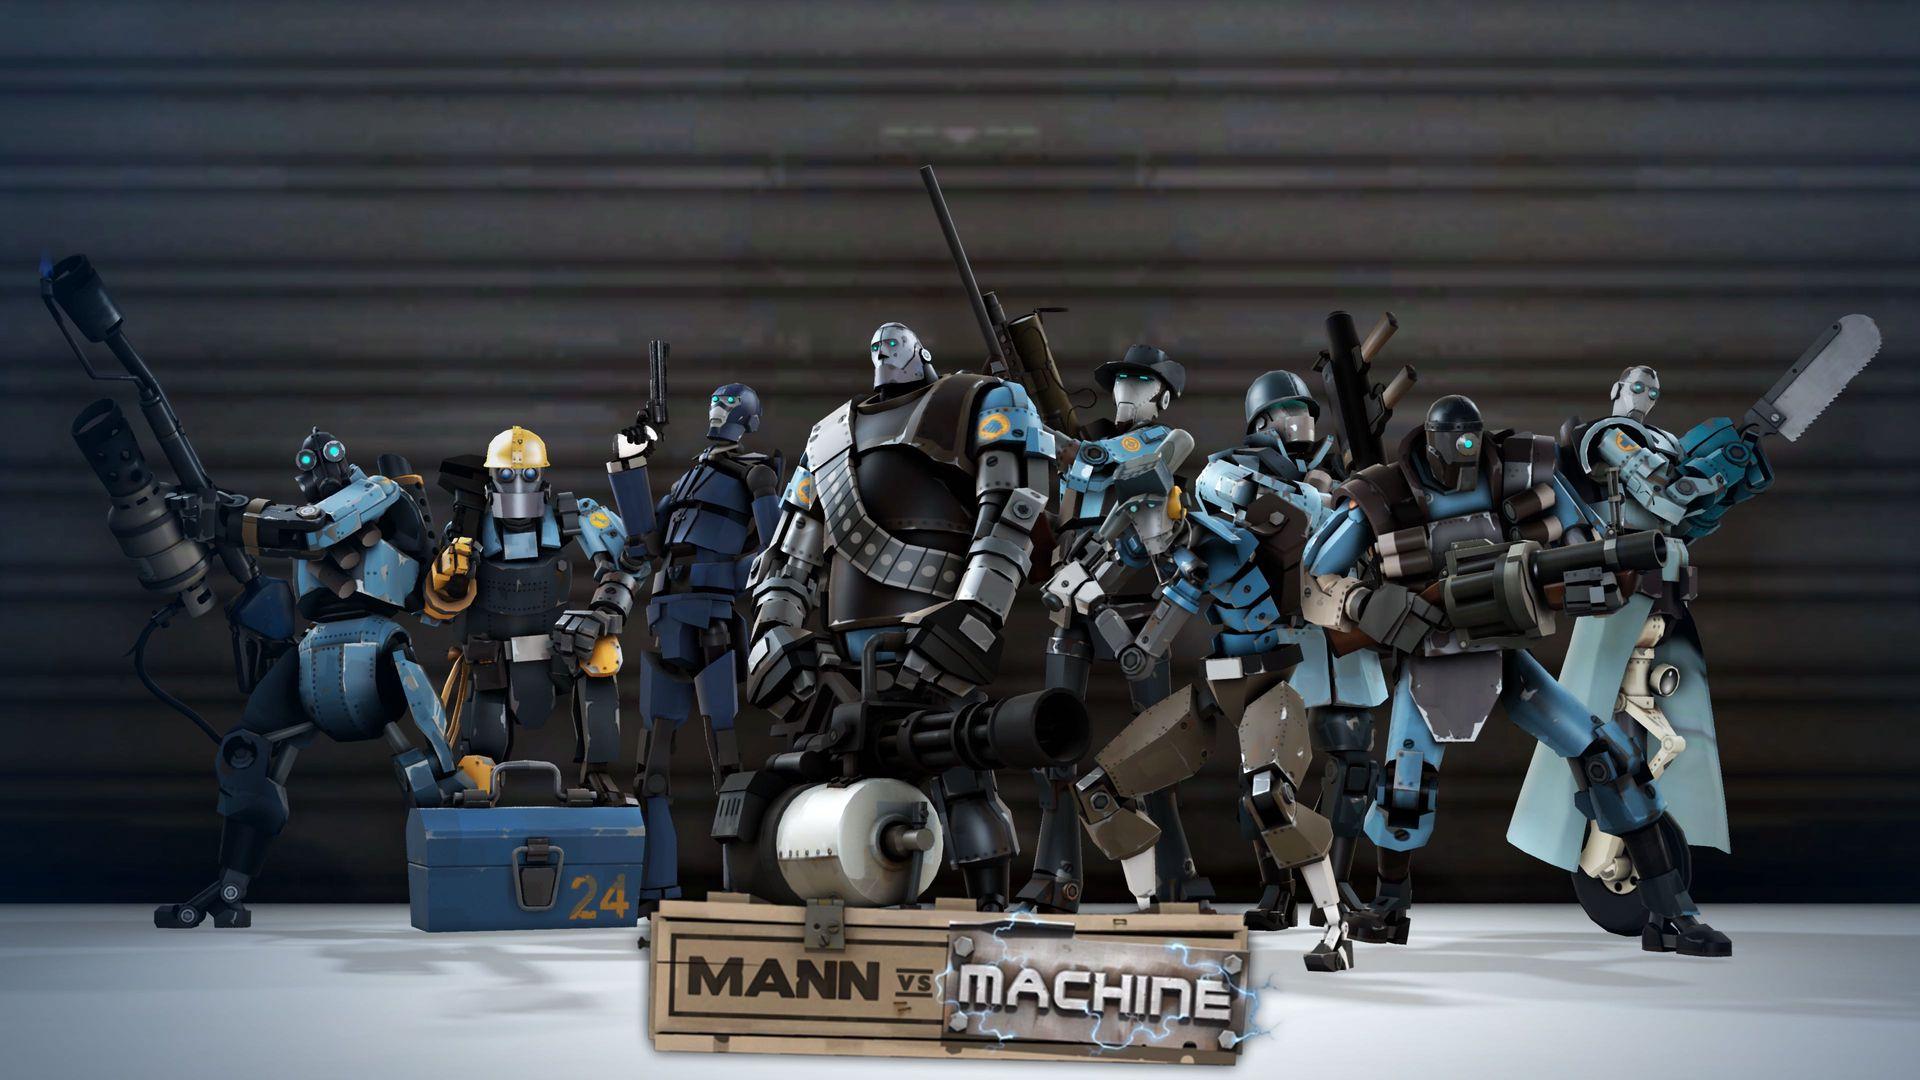 Mann Vs Machine: Behind The Metal Frame The Bots